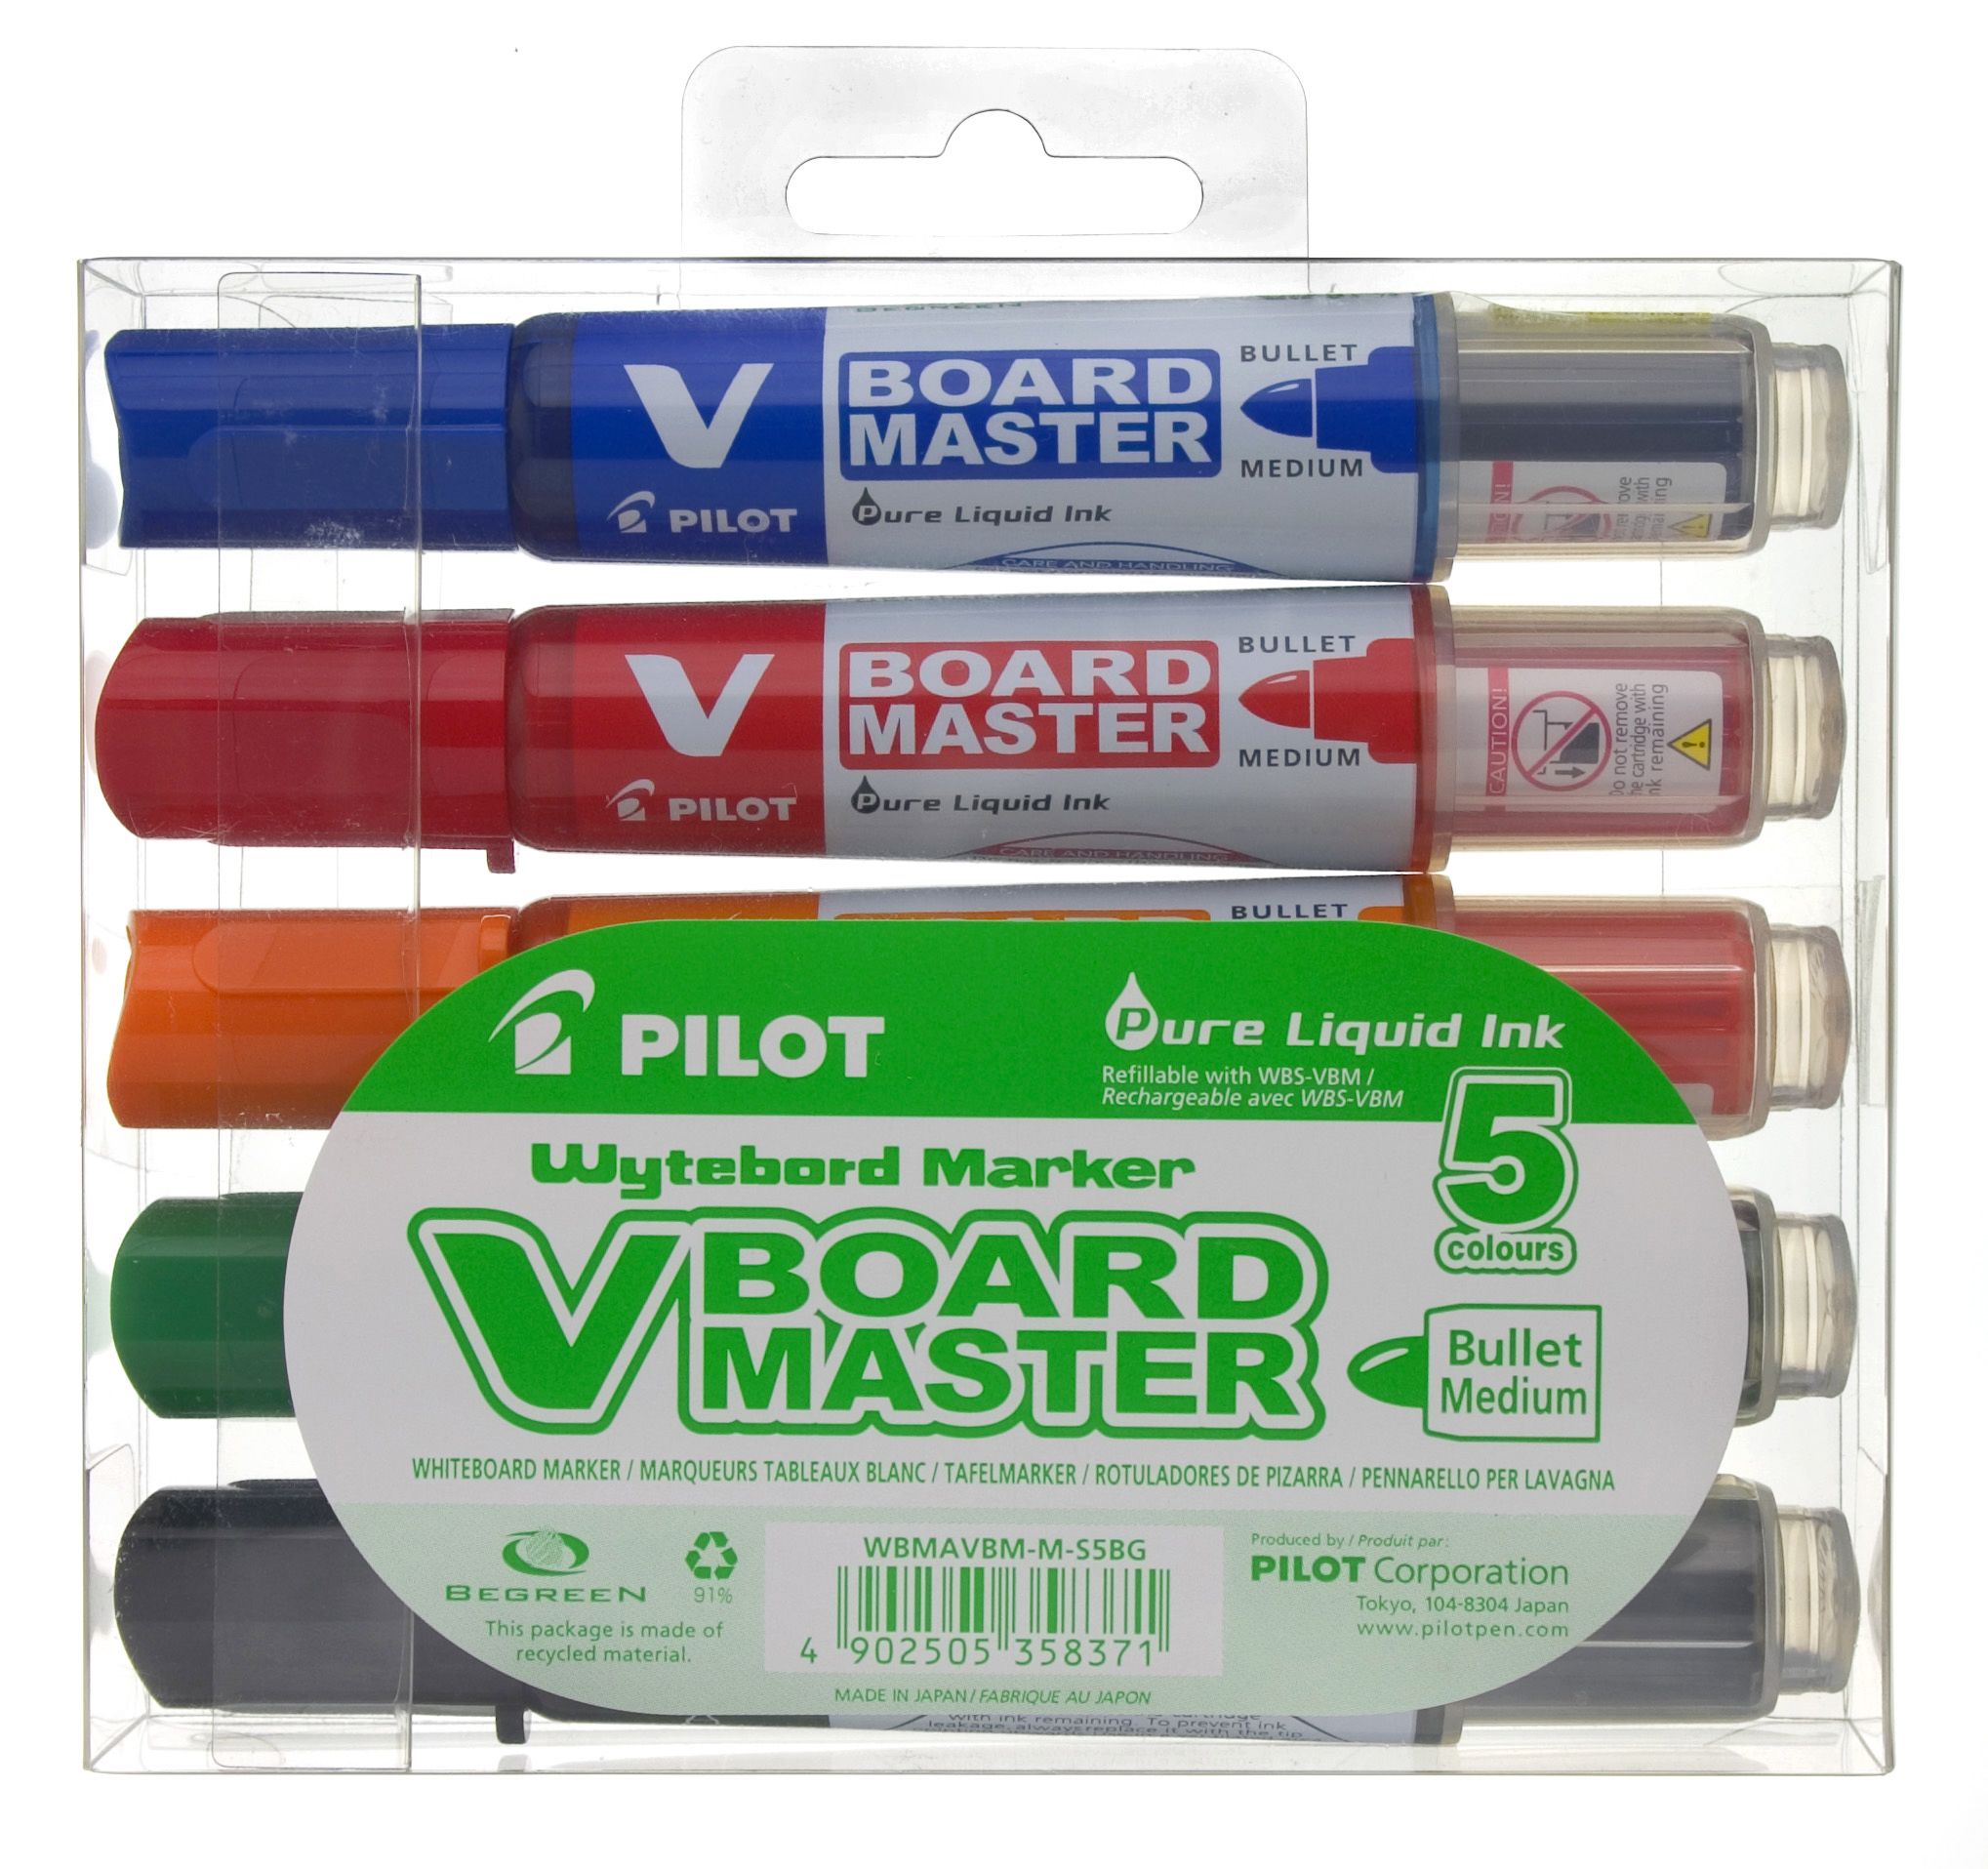 Pilot V Board Master Begreen 5 ks, mix barev